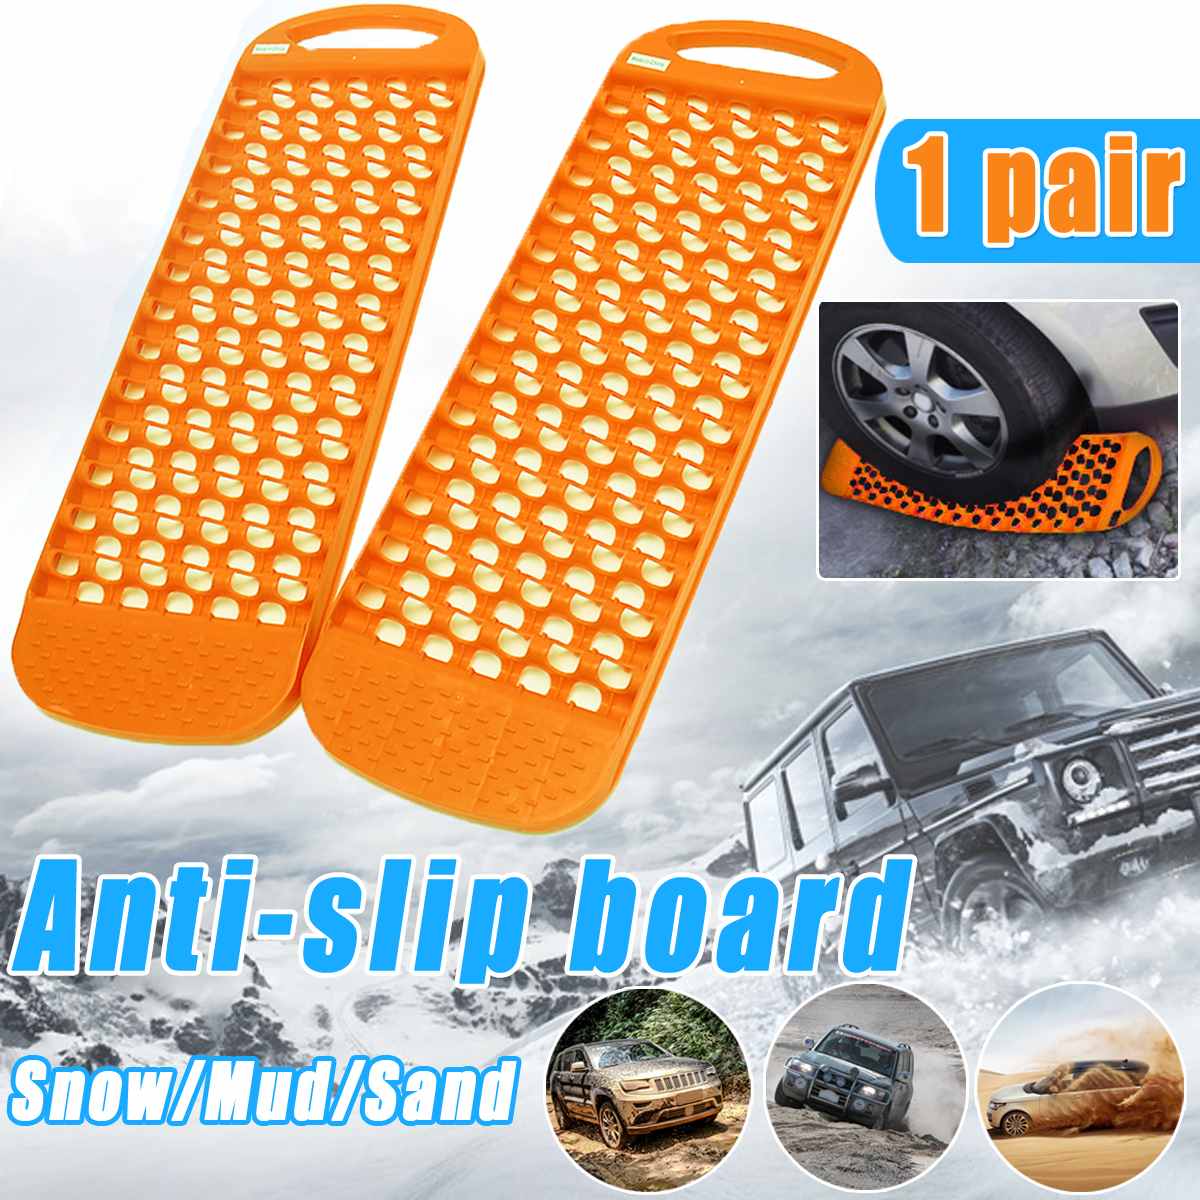 Paar Universal Car Tire Slip Mat Anti-Play Sliding Pad Zelfhulp Rescue Board Emergency Sneeuwveld Rescue Board anti-Slip Board